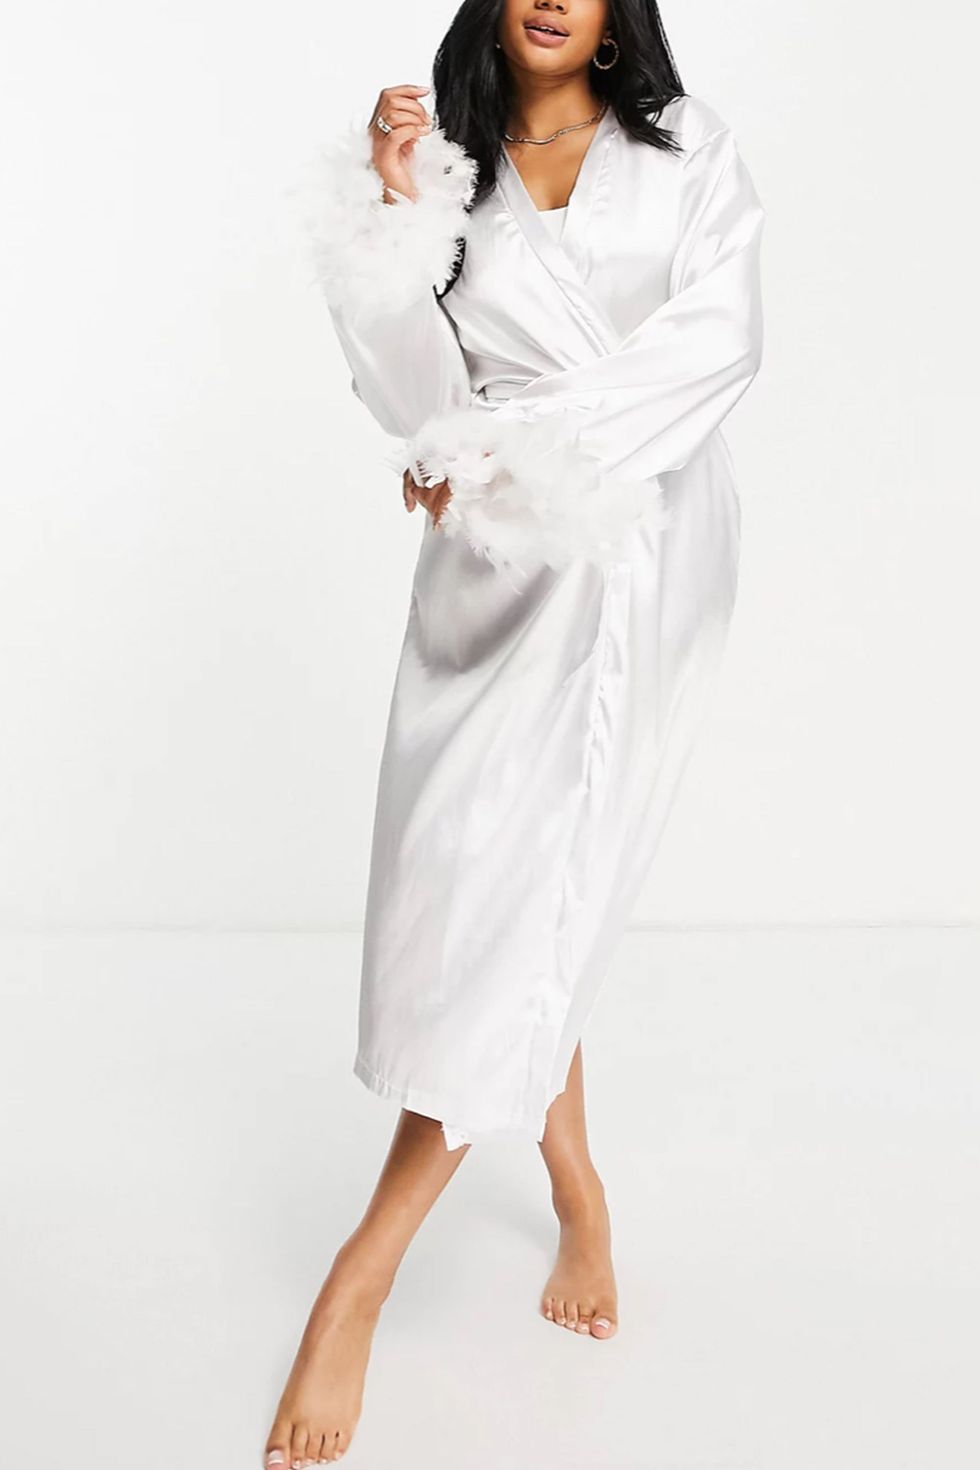 Glossy Pure Silk Robe For Women - White / S